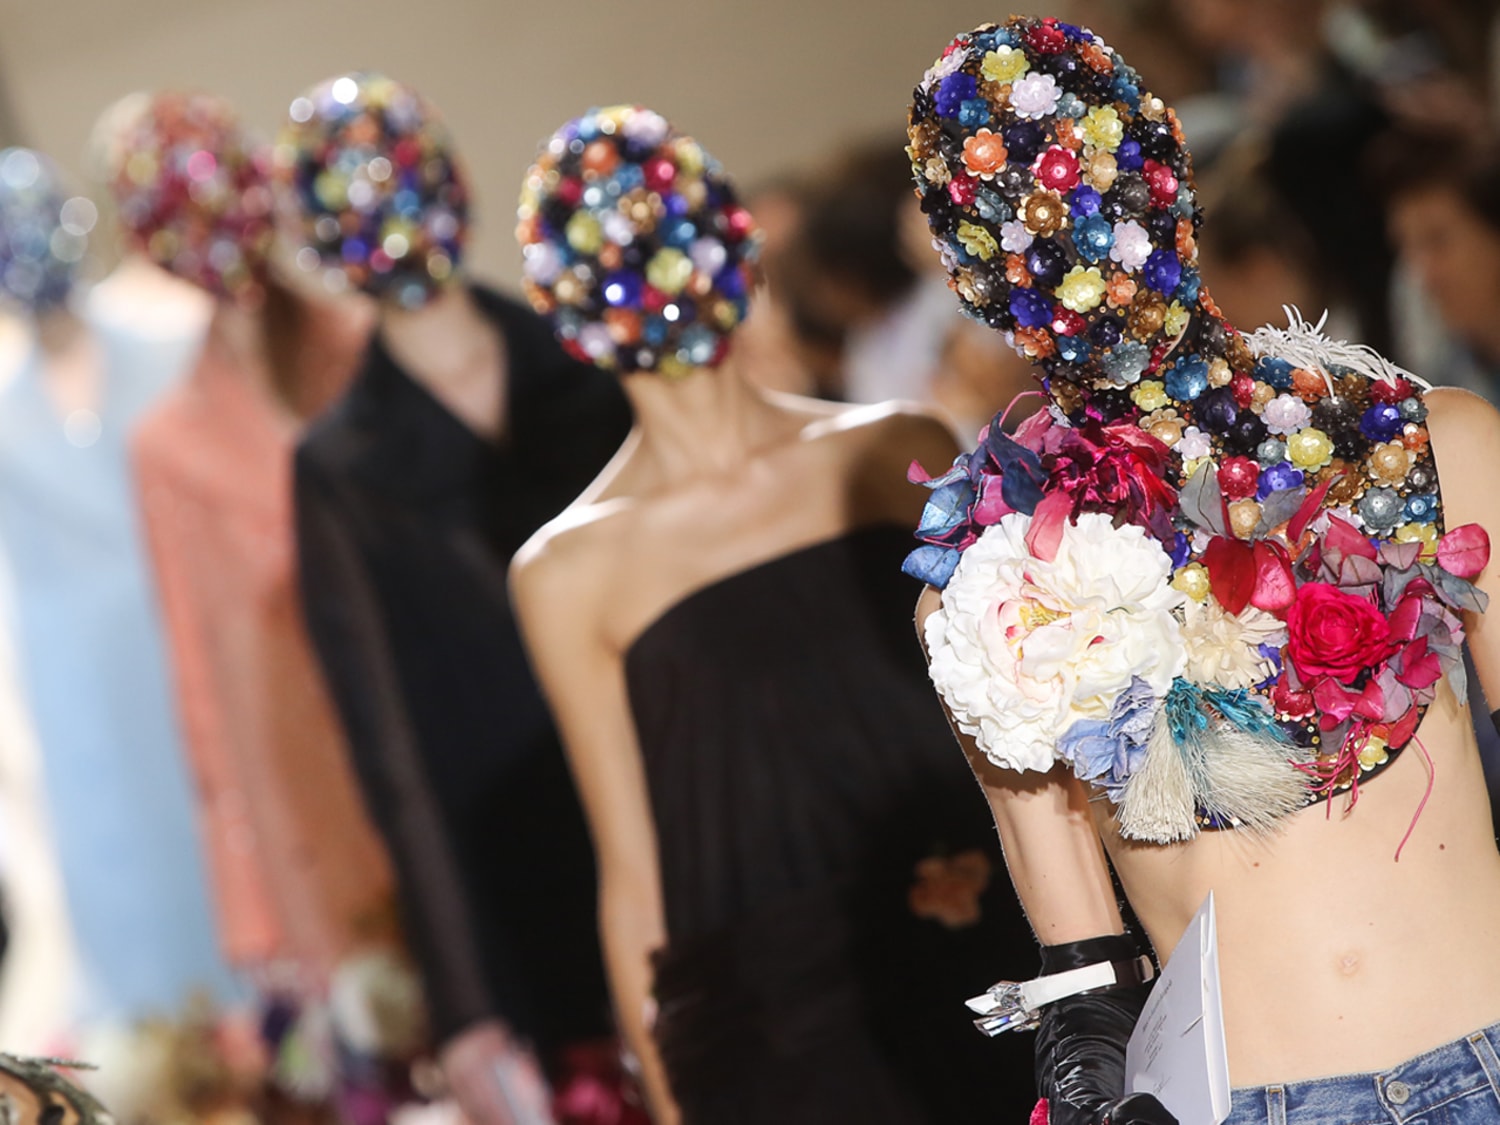 Unibrows, skull purses: Paris fashion gets wacky